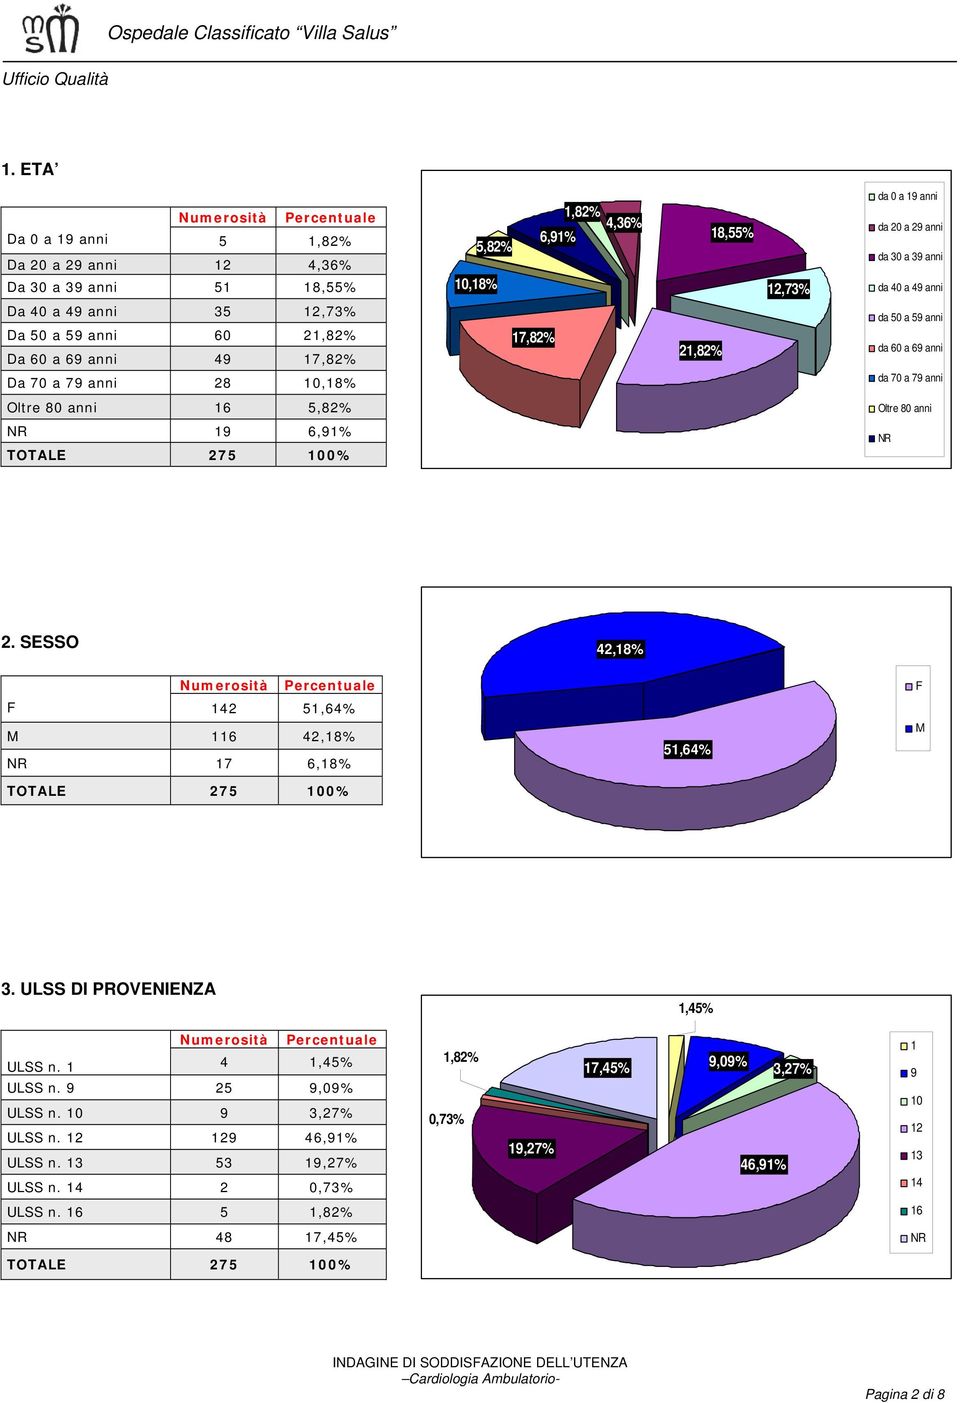 16 5,82% Oltre 80 anni 19 6,91% 2. SESSO 42,18% Numerosità Percentuale F F 142 51,64% M 116 42,18% 17 6,18% 51,64% M 3. ULSS DI PROVENIENZA 1,45% ULSS n. 1 4 1,45% ULSS n.